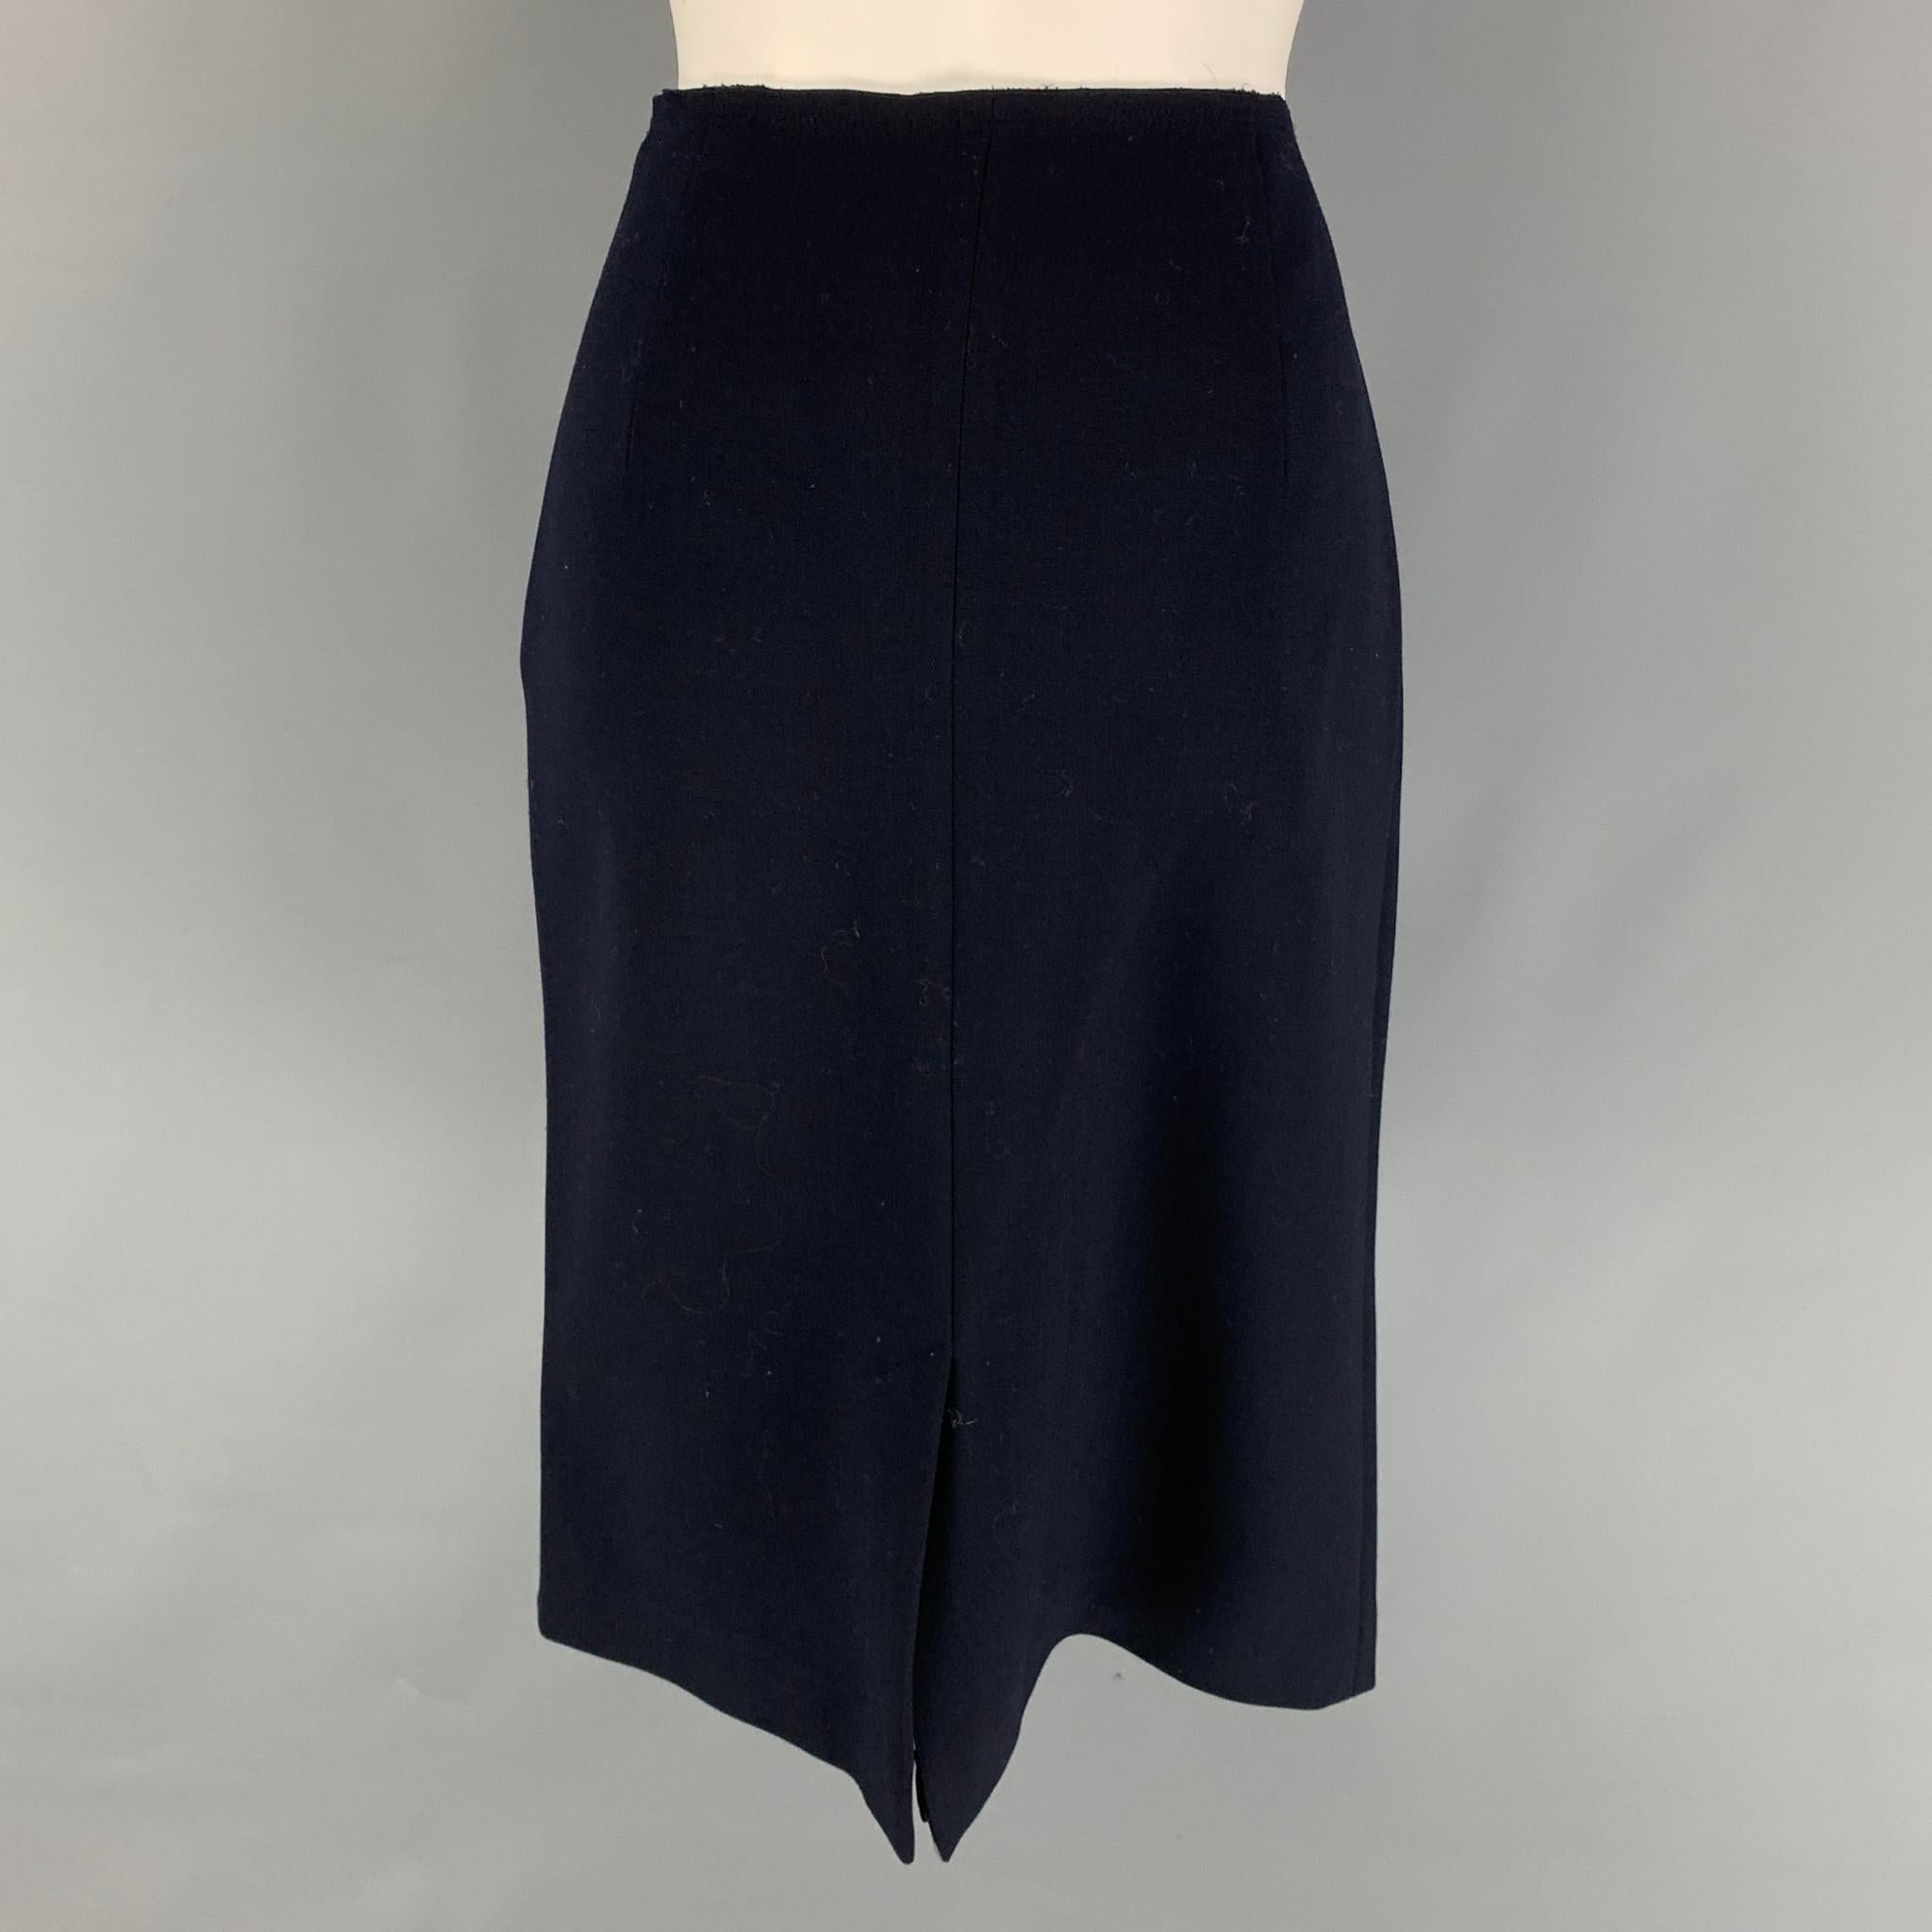 size 8 pencil skirt